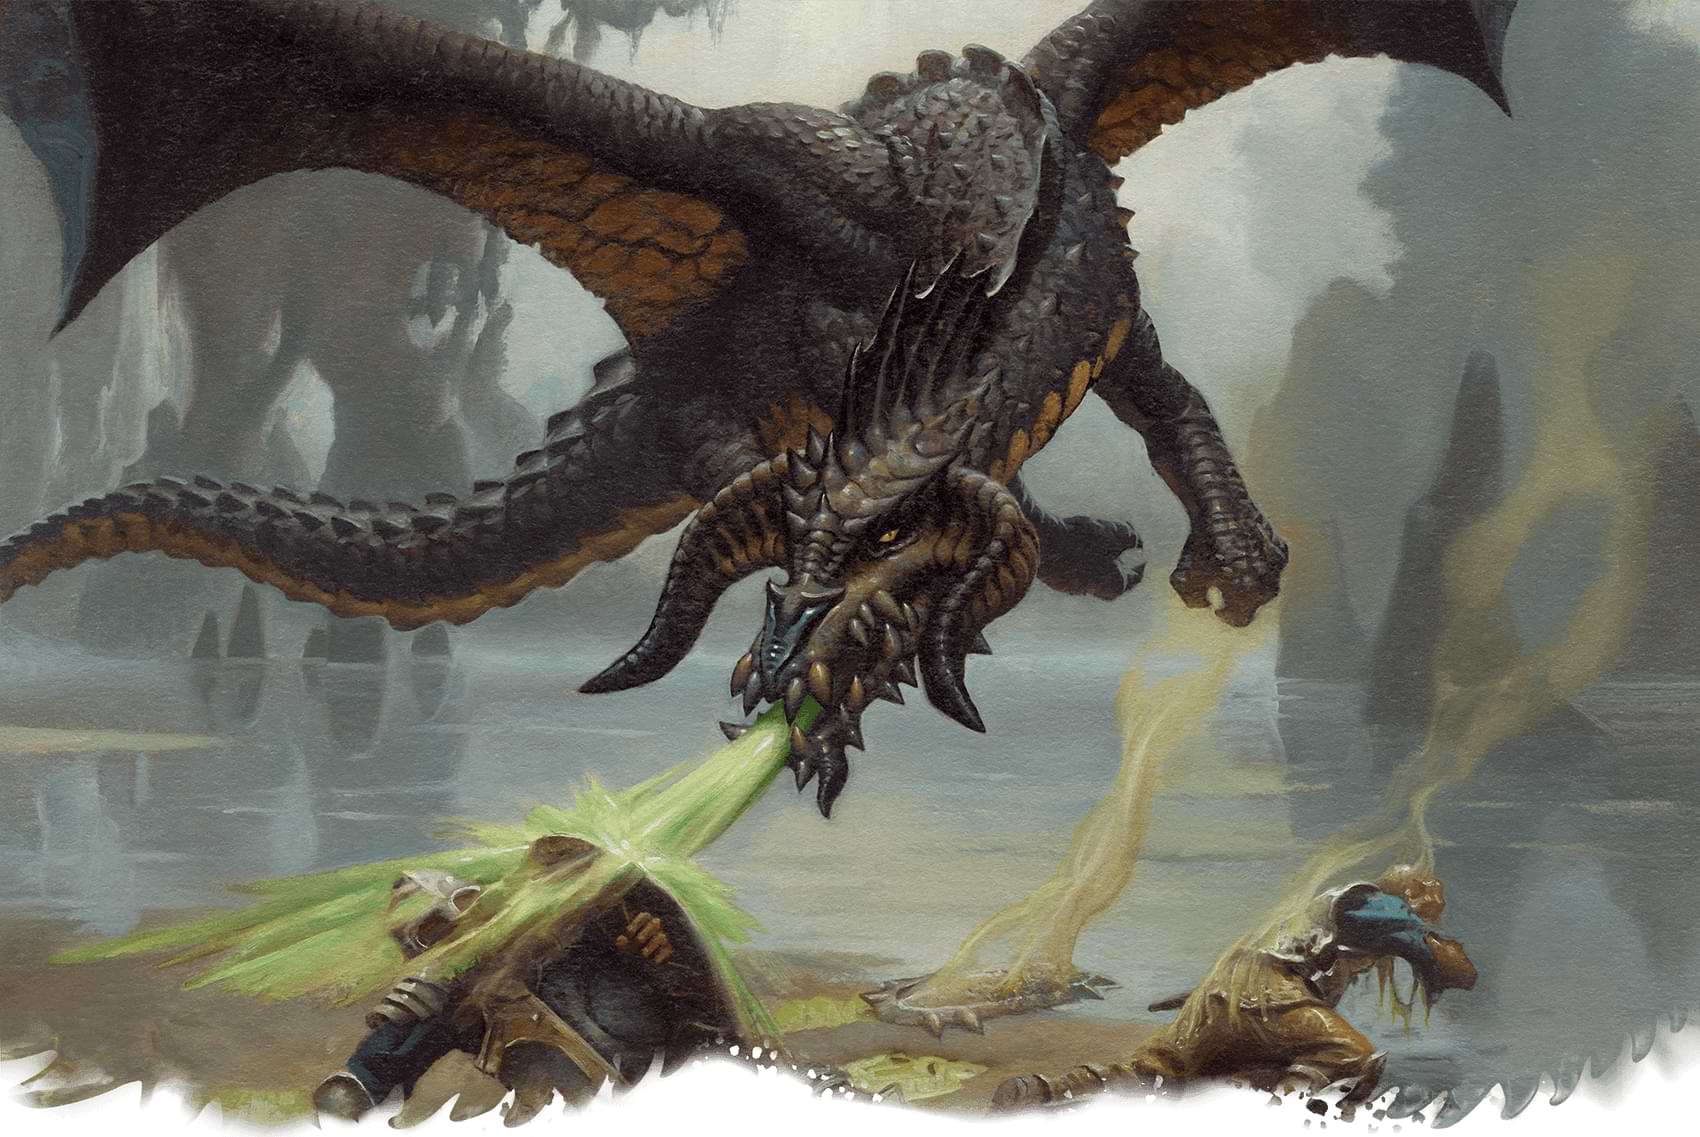 A black dragon spitting acid at an adventurer